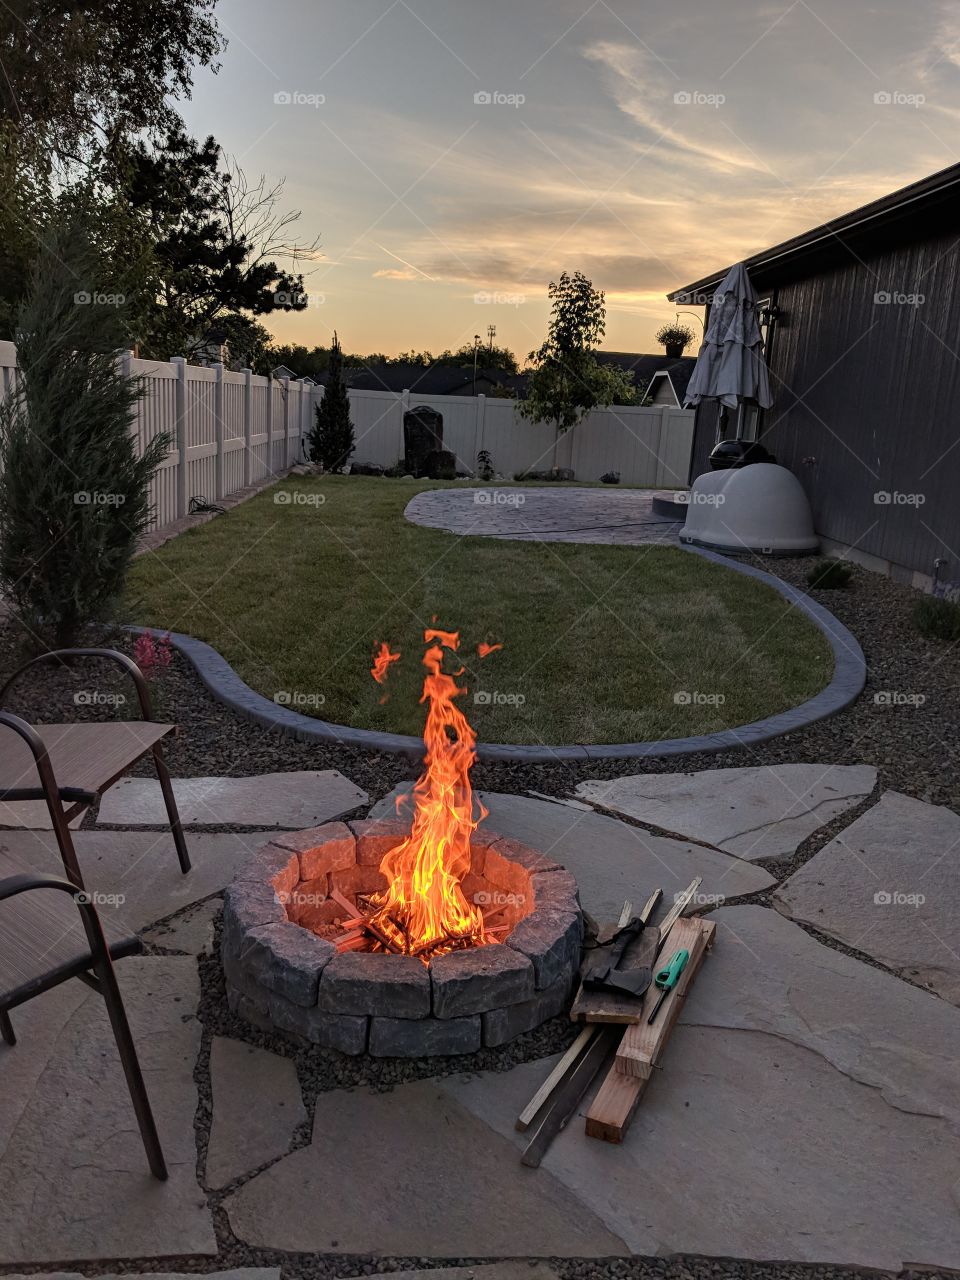 Campfire on a Summer's Night